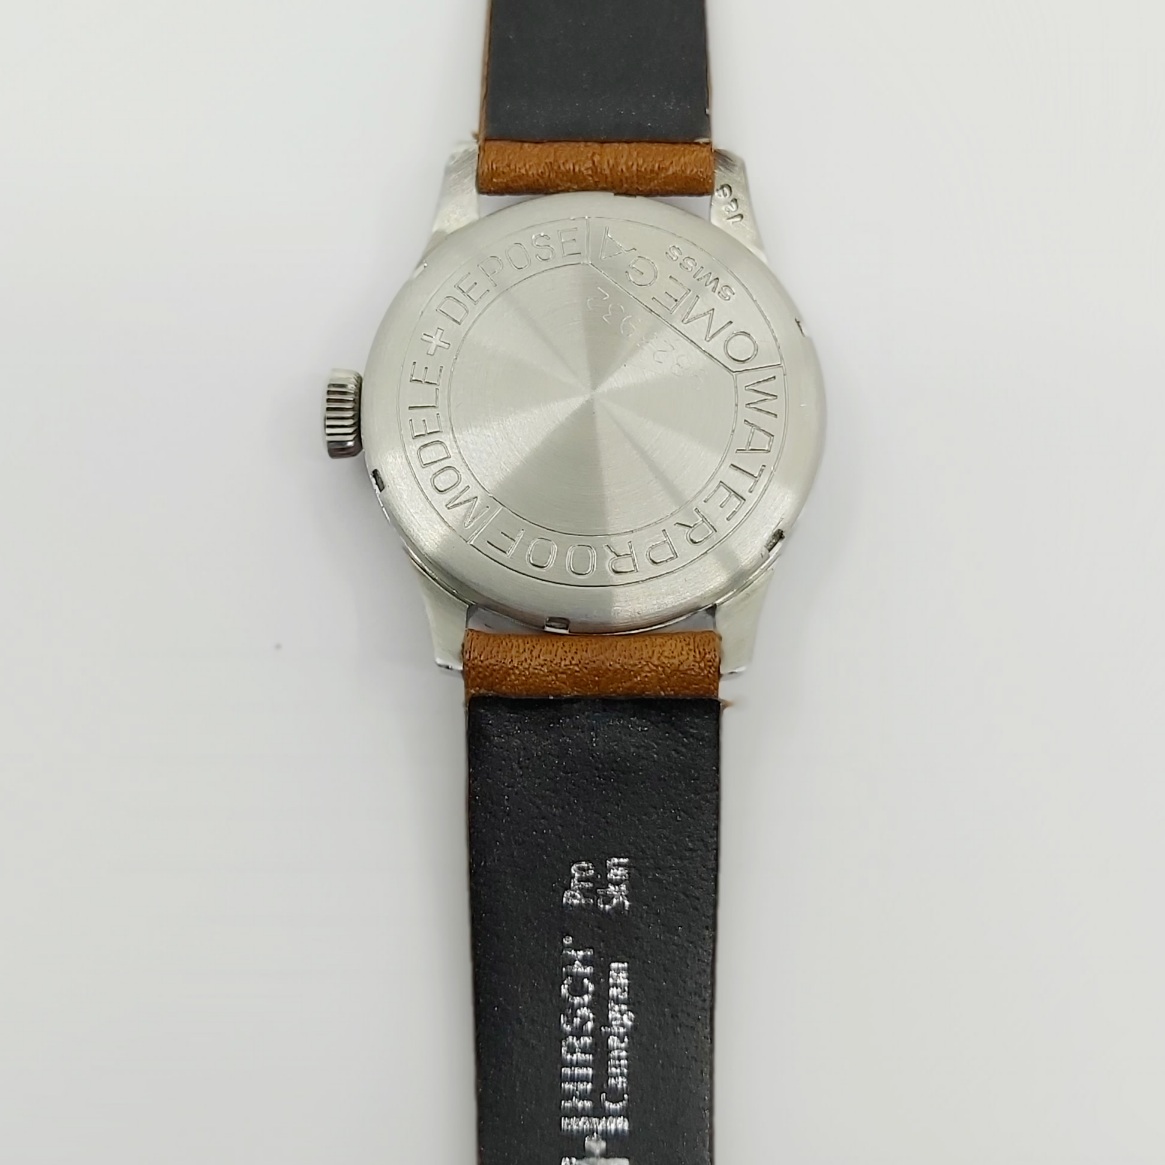 1 Uhr OMEGA Vintage 1942, Cal. 30T2, Stahl, Lederband